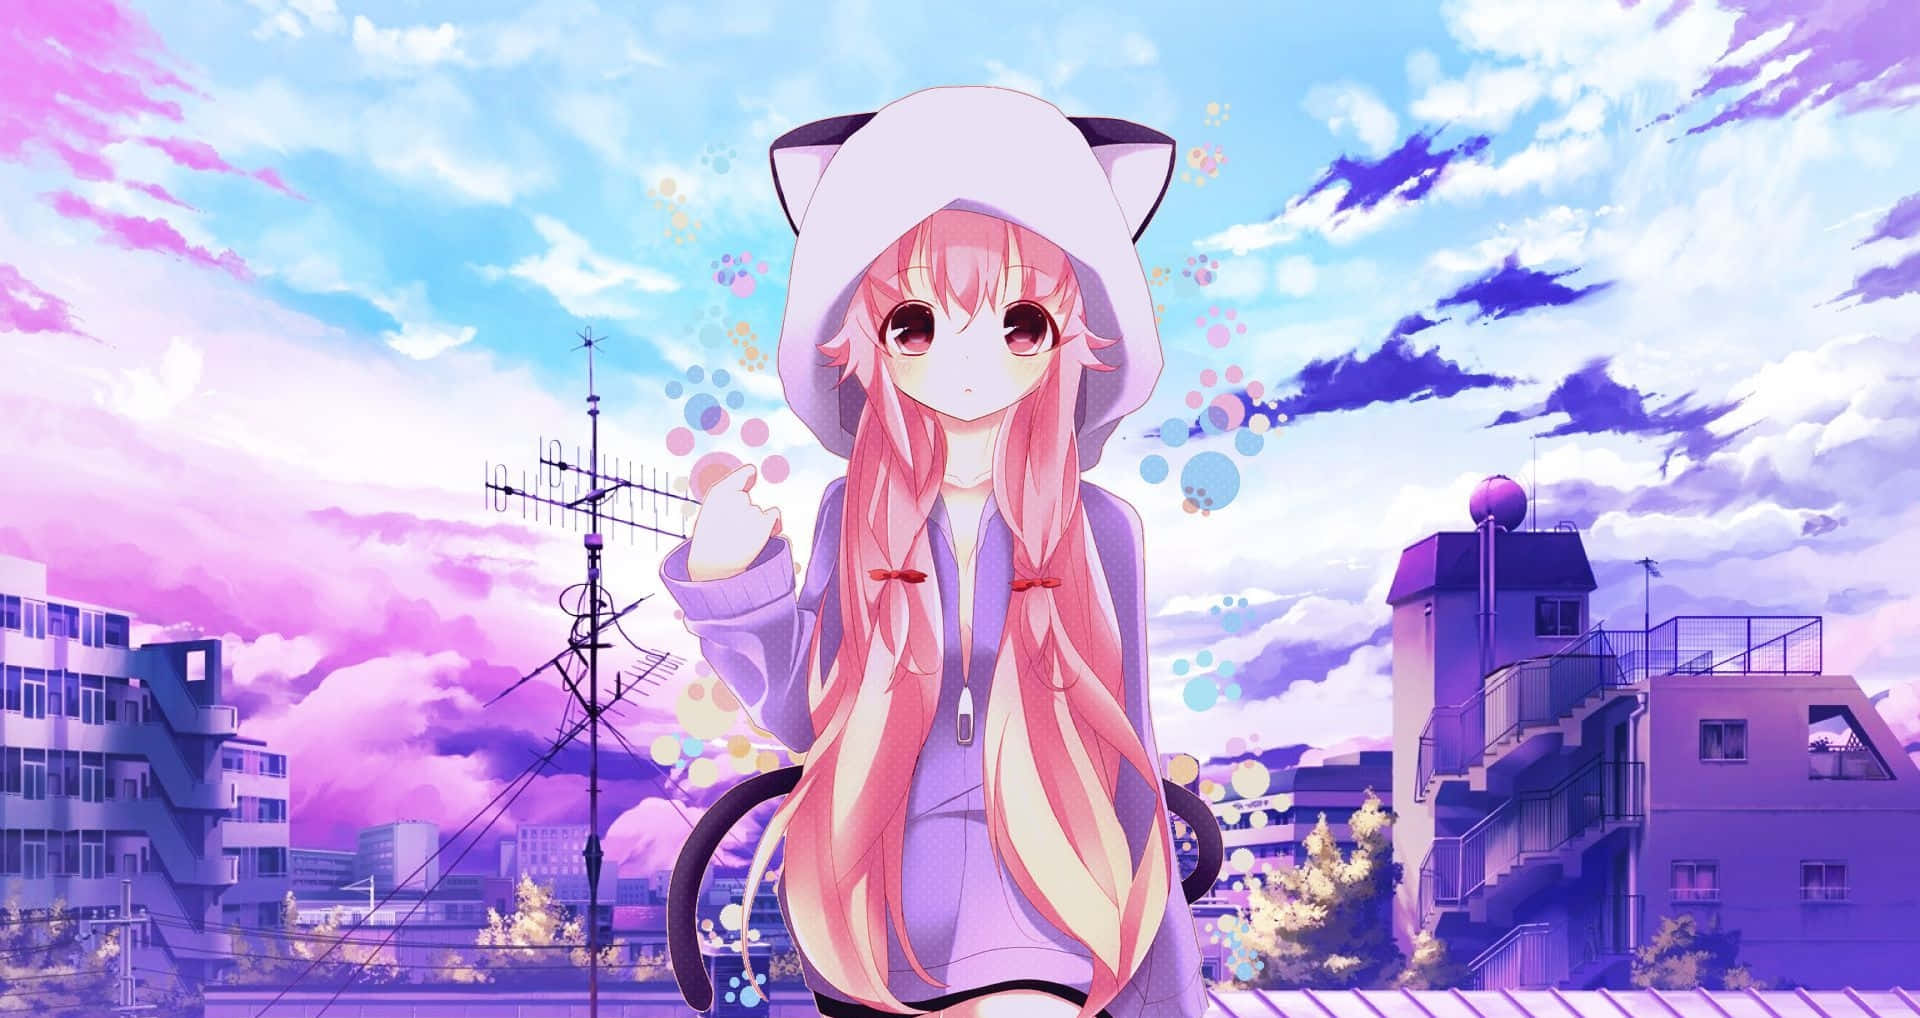 Imagenfondo De Pantalla Animado De Color Púrpura Vibrante De Anime. Fondo de pantalla